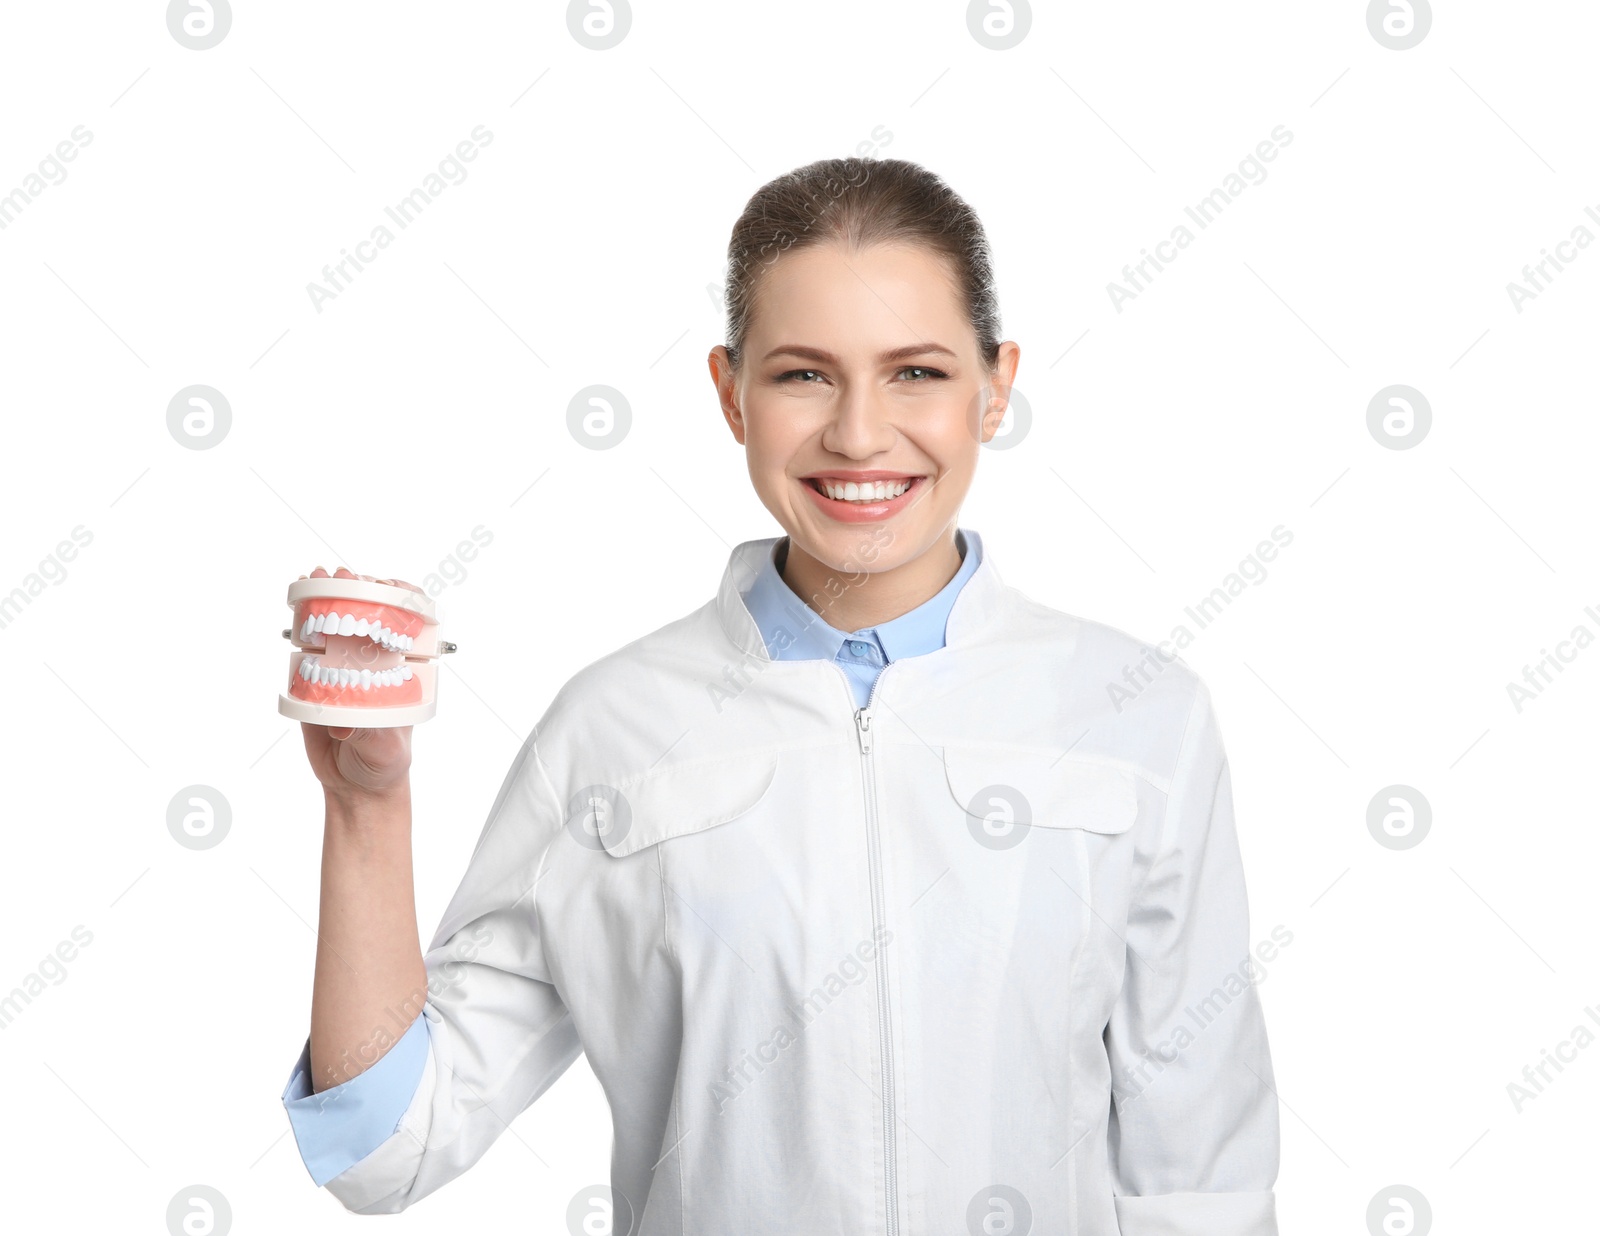 Photo of Female dentist holding jaws model on white background